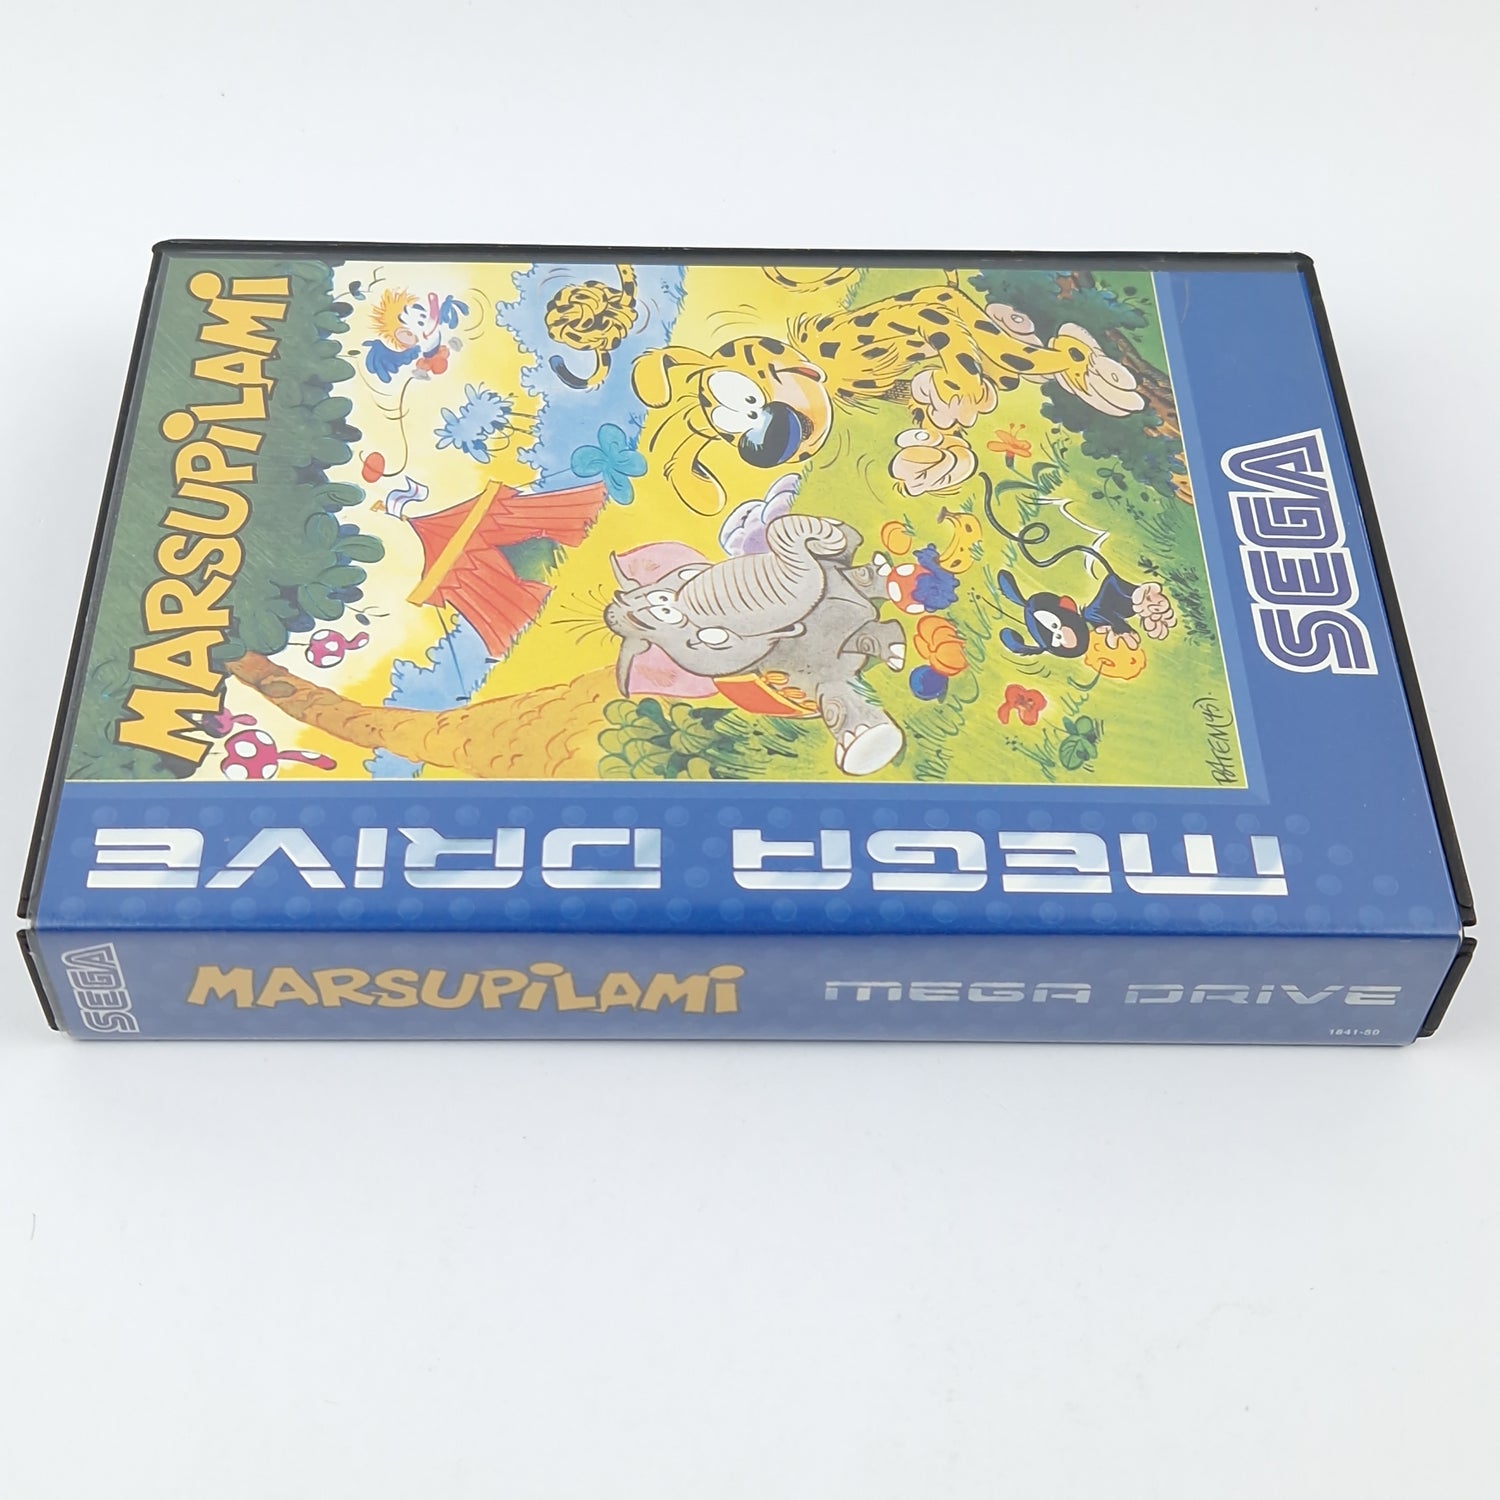 Sega Mega Drive Spiel : Marsupilami - Modul Anleitung OVP cib / PAL MD GAME